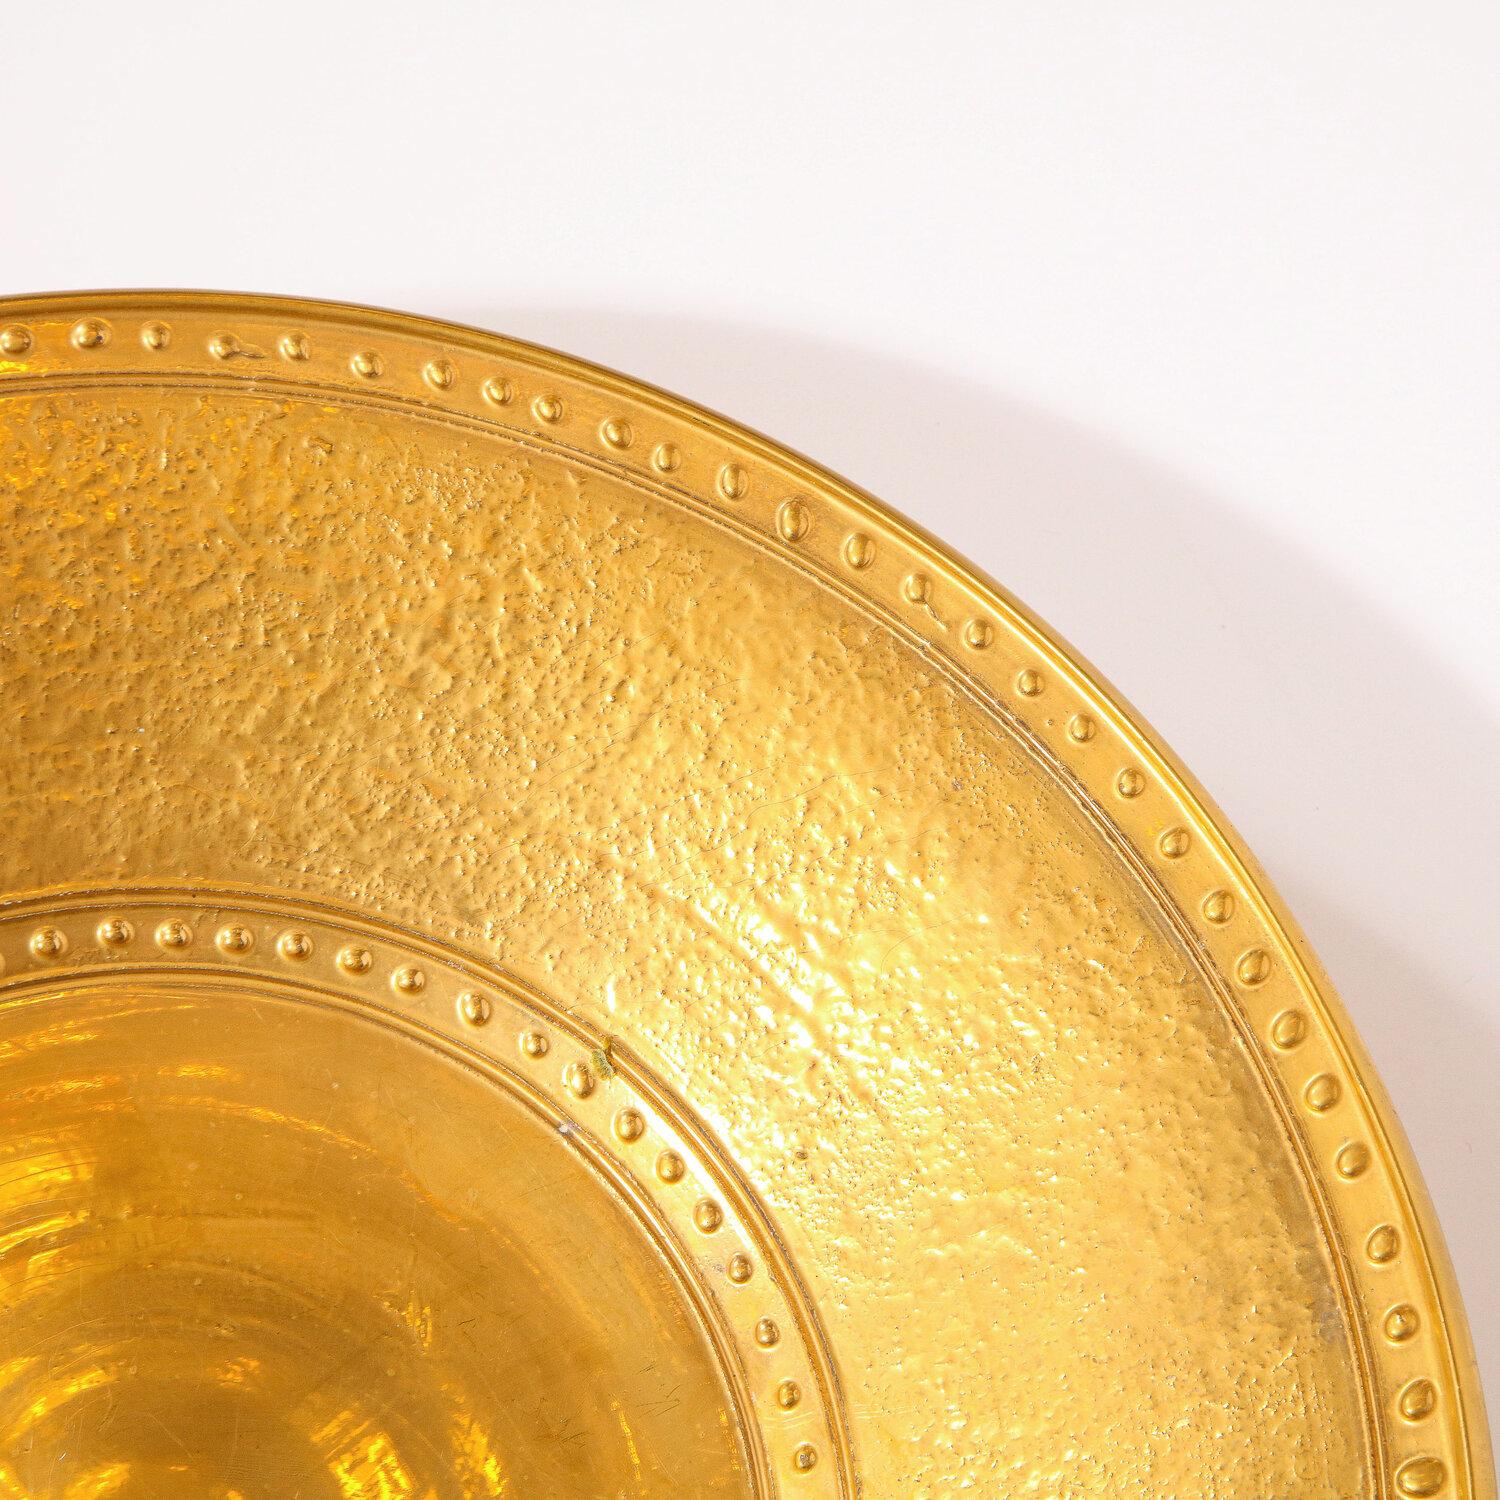 Ceramic Modernist 24kt Gold Leaf Center Plate Signed Rondier by Lorin Marsh